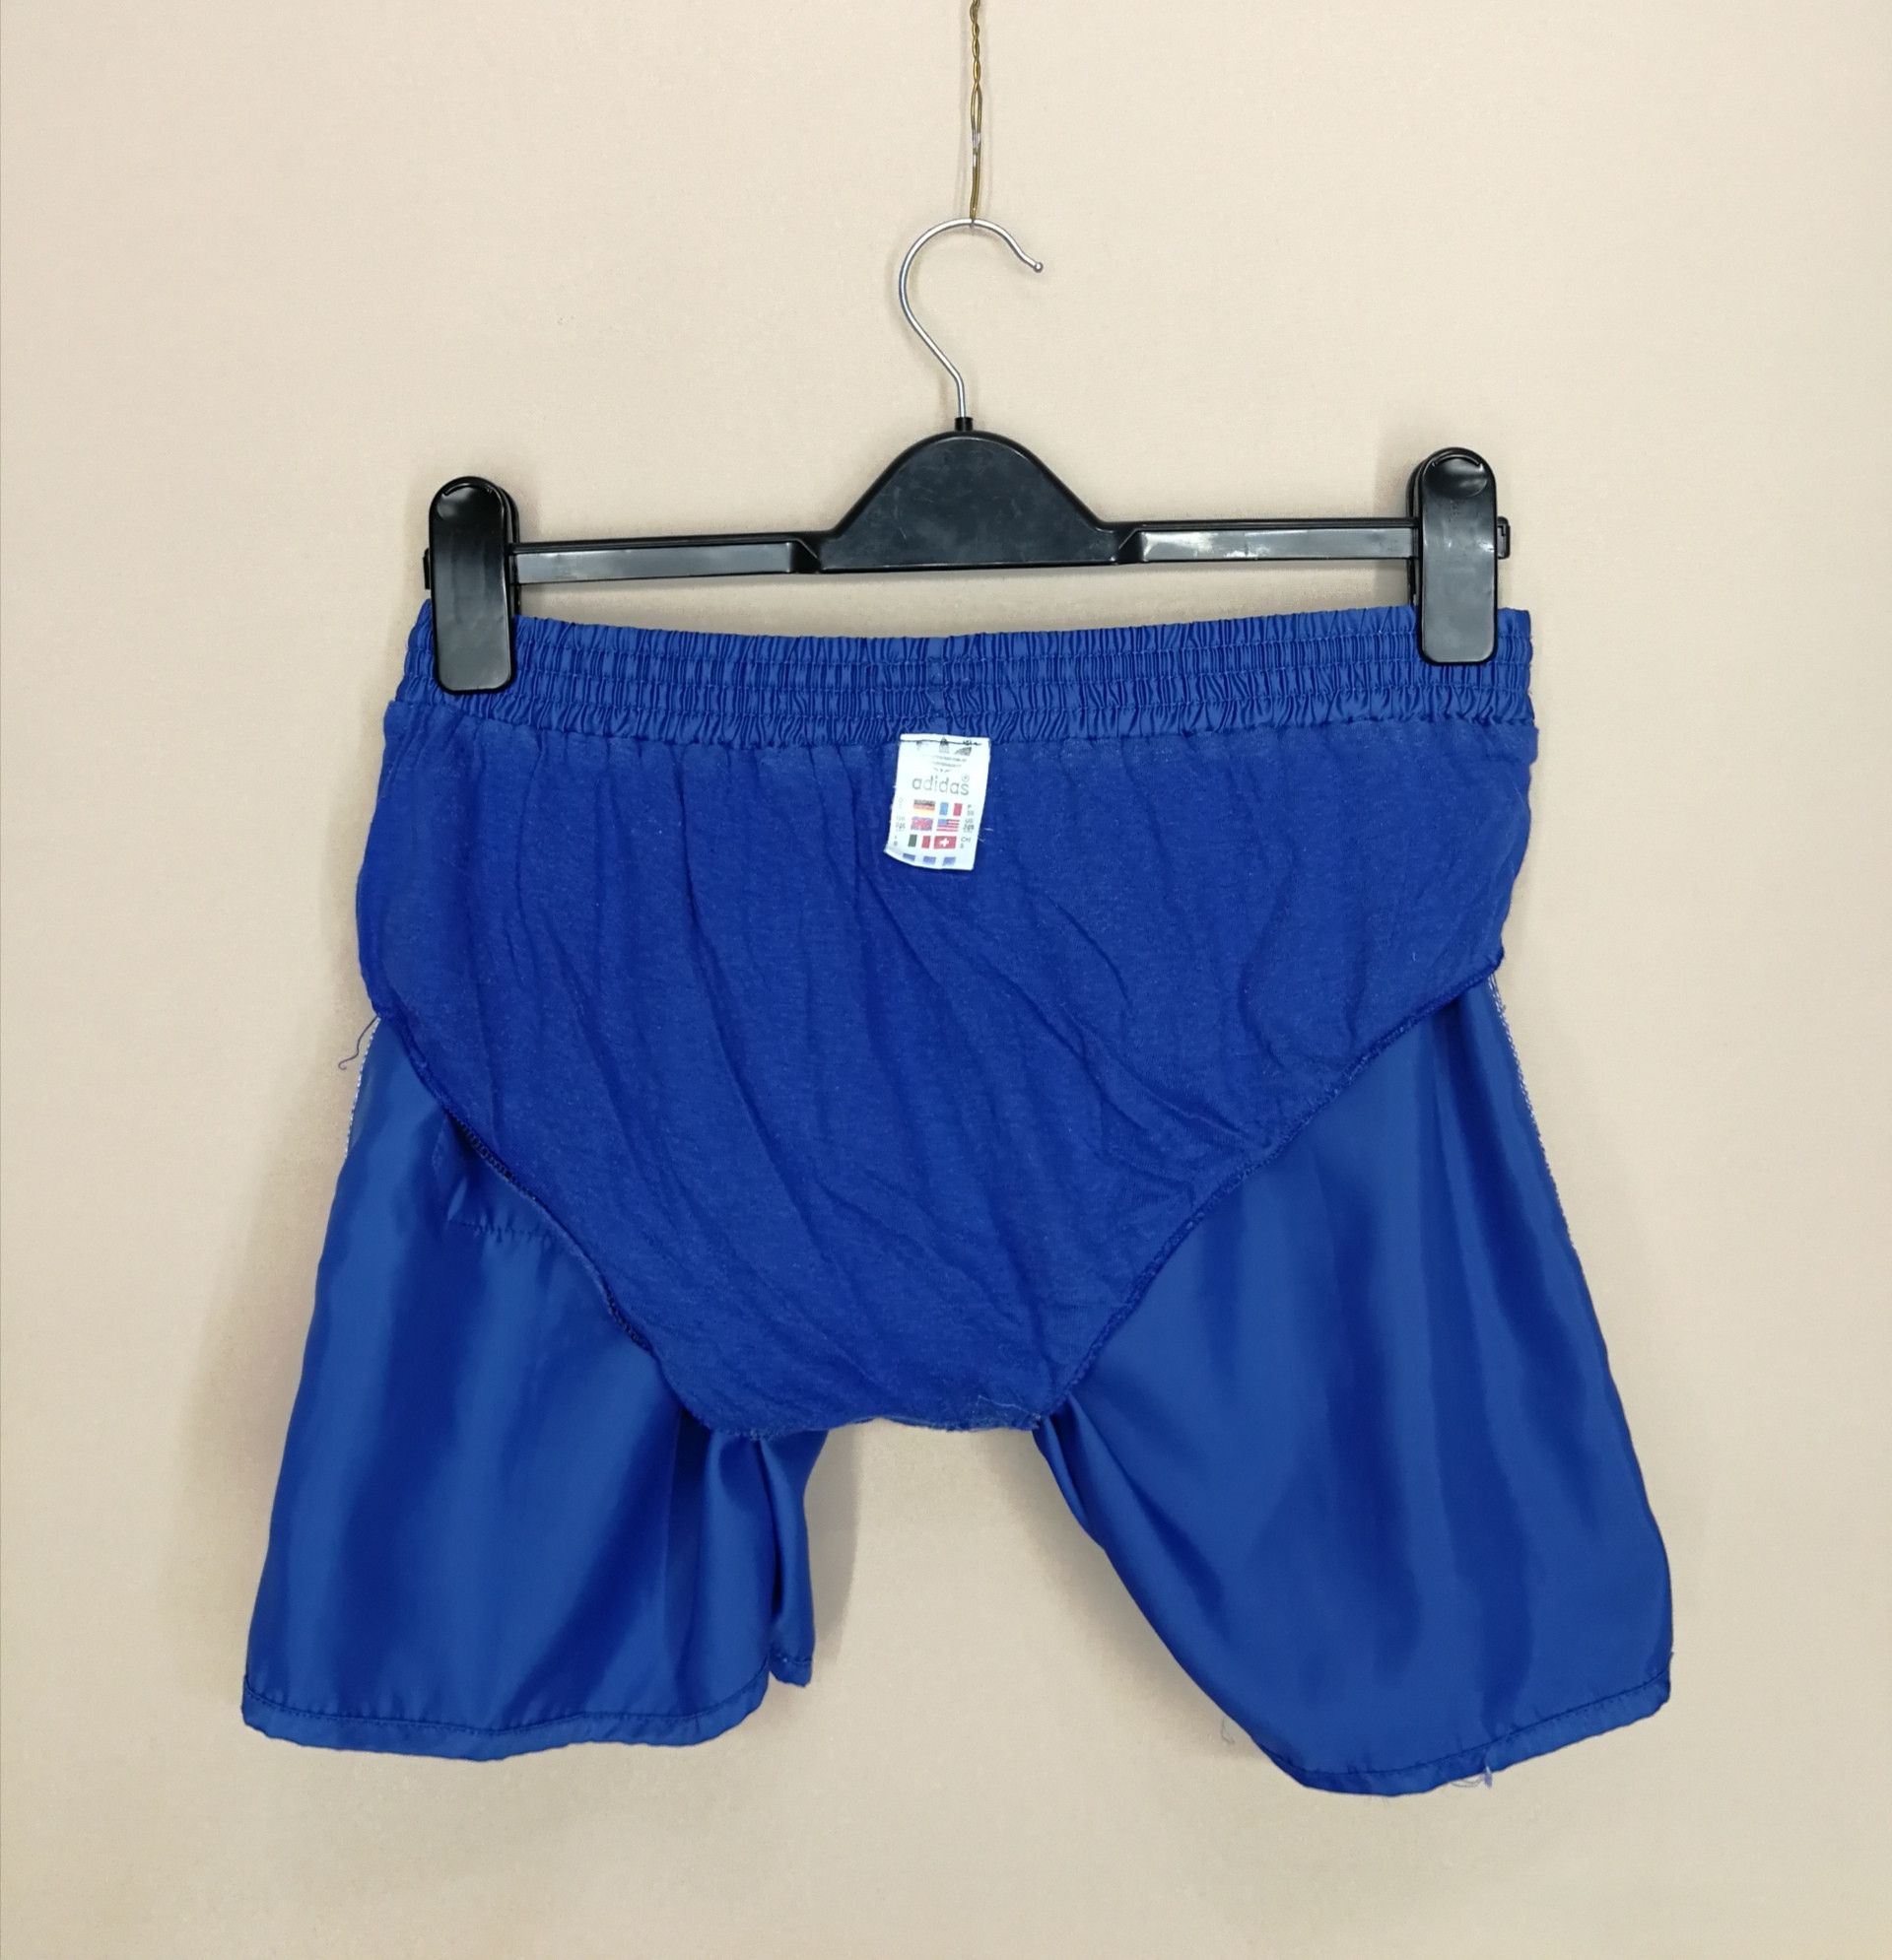 Adidas Vintage 80's Adidas Shorts Blue Yugoslavia Size US 32 / EU 48 - 7 Thumbnail